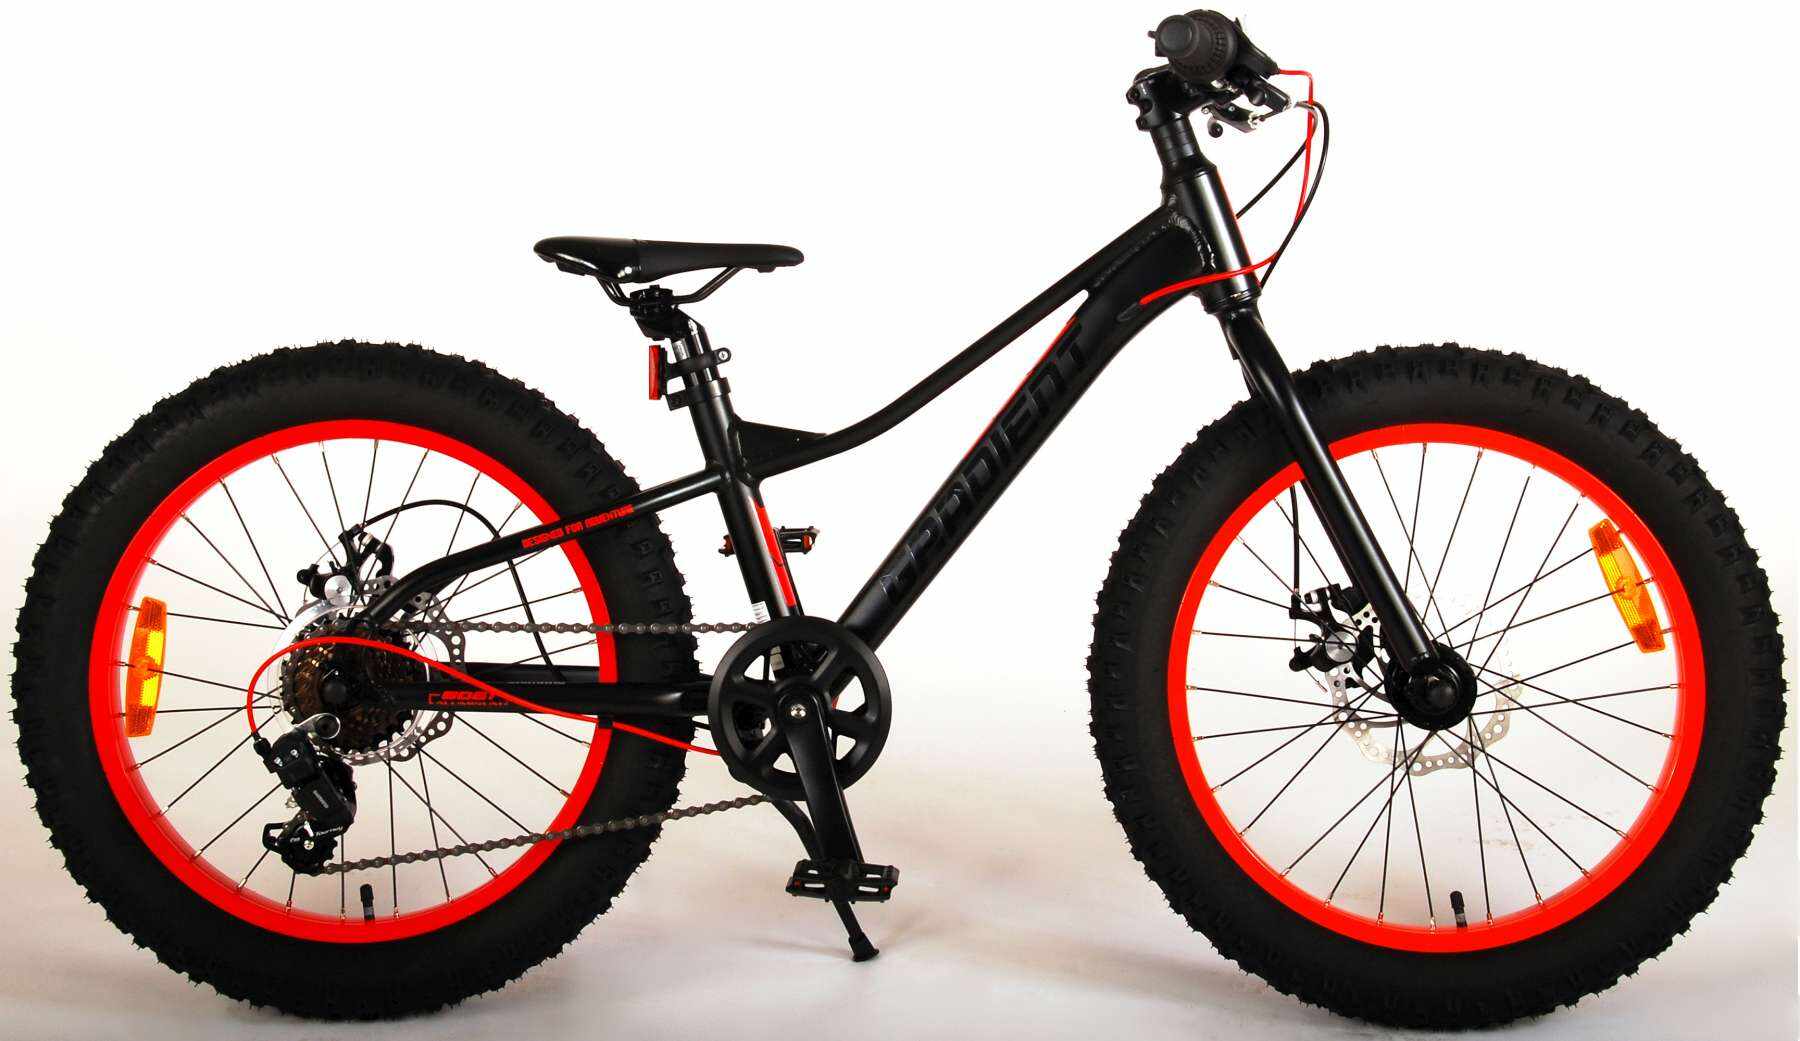 Bicicleta Volare Gradient pentru baieti, 20 inch, culoare negru/portocaliu/rosu Prime Collection, frana de mana fata - spate